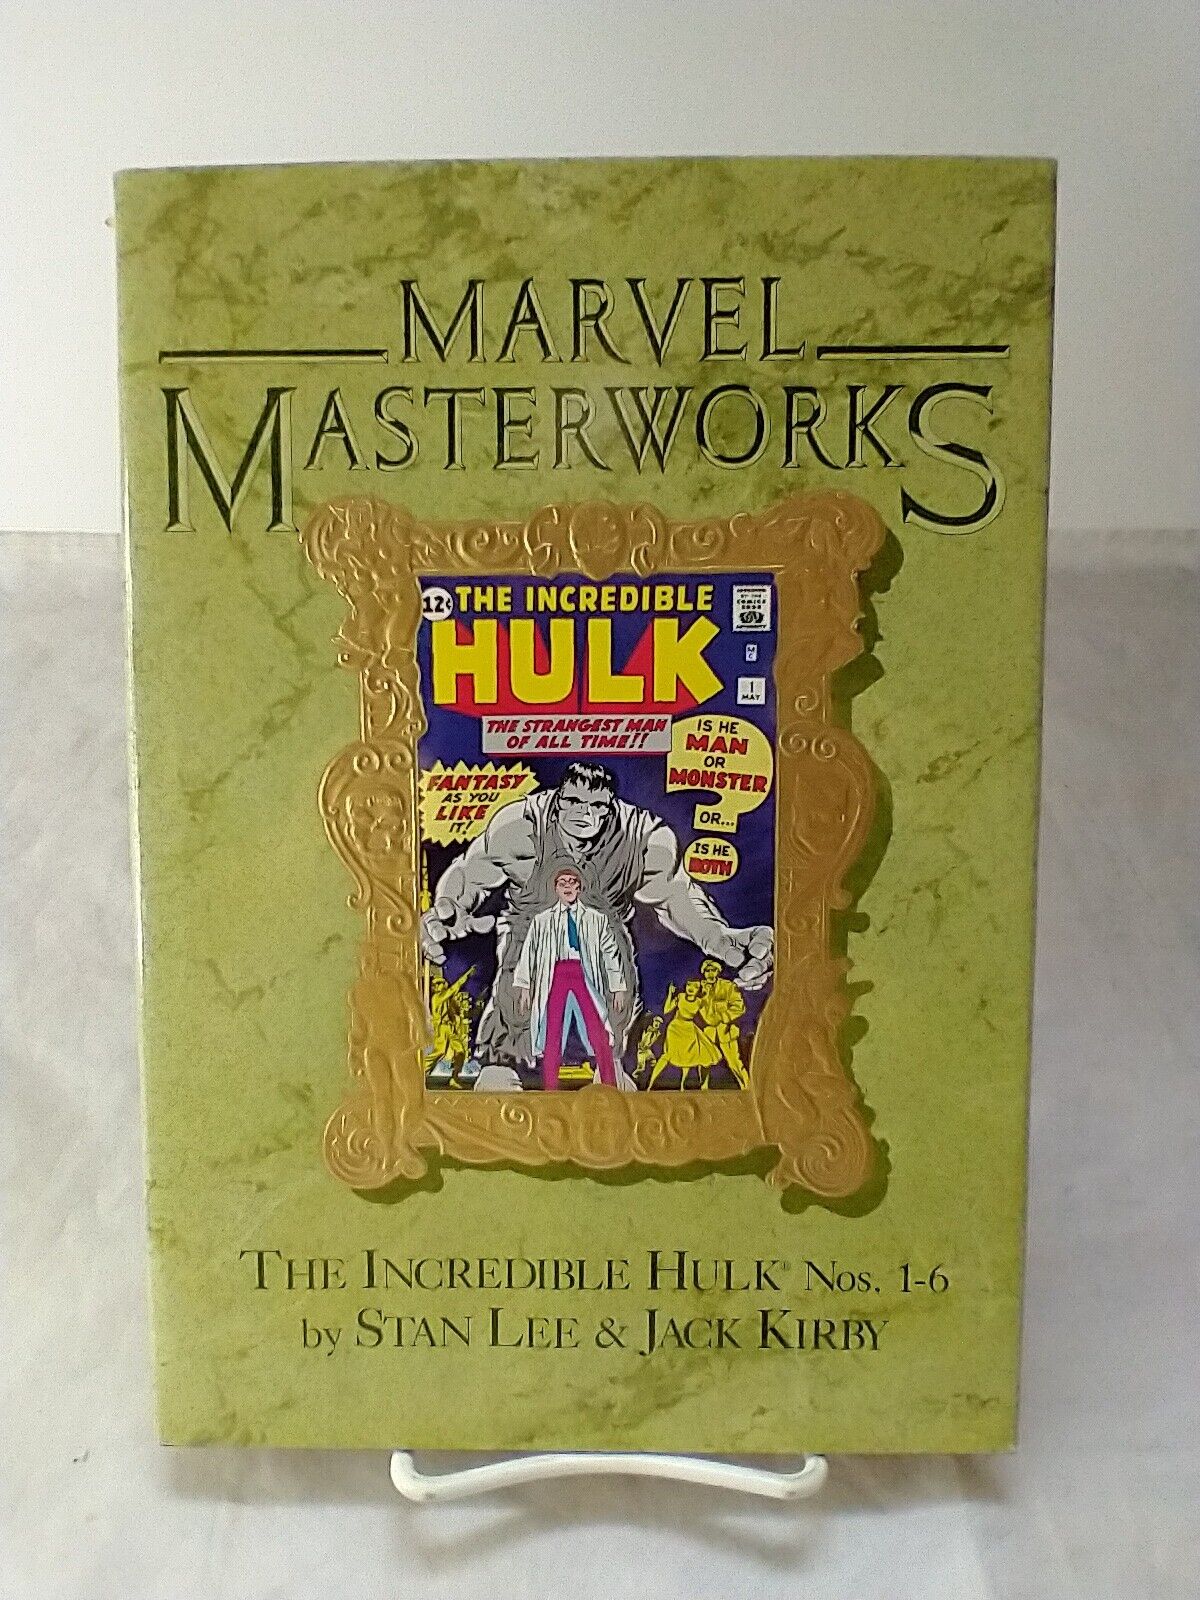 Marvel Masterworks #8: The Incredible Hulk Nos. 1-6 (Marvel, September 1989)